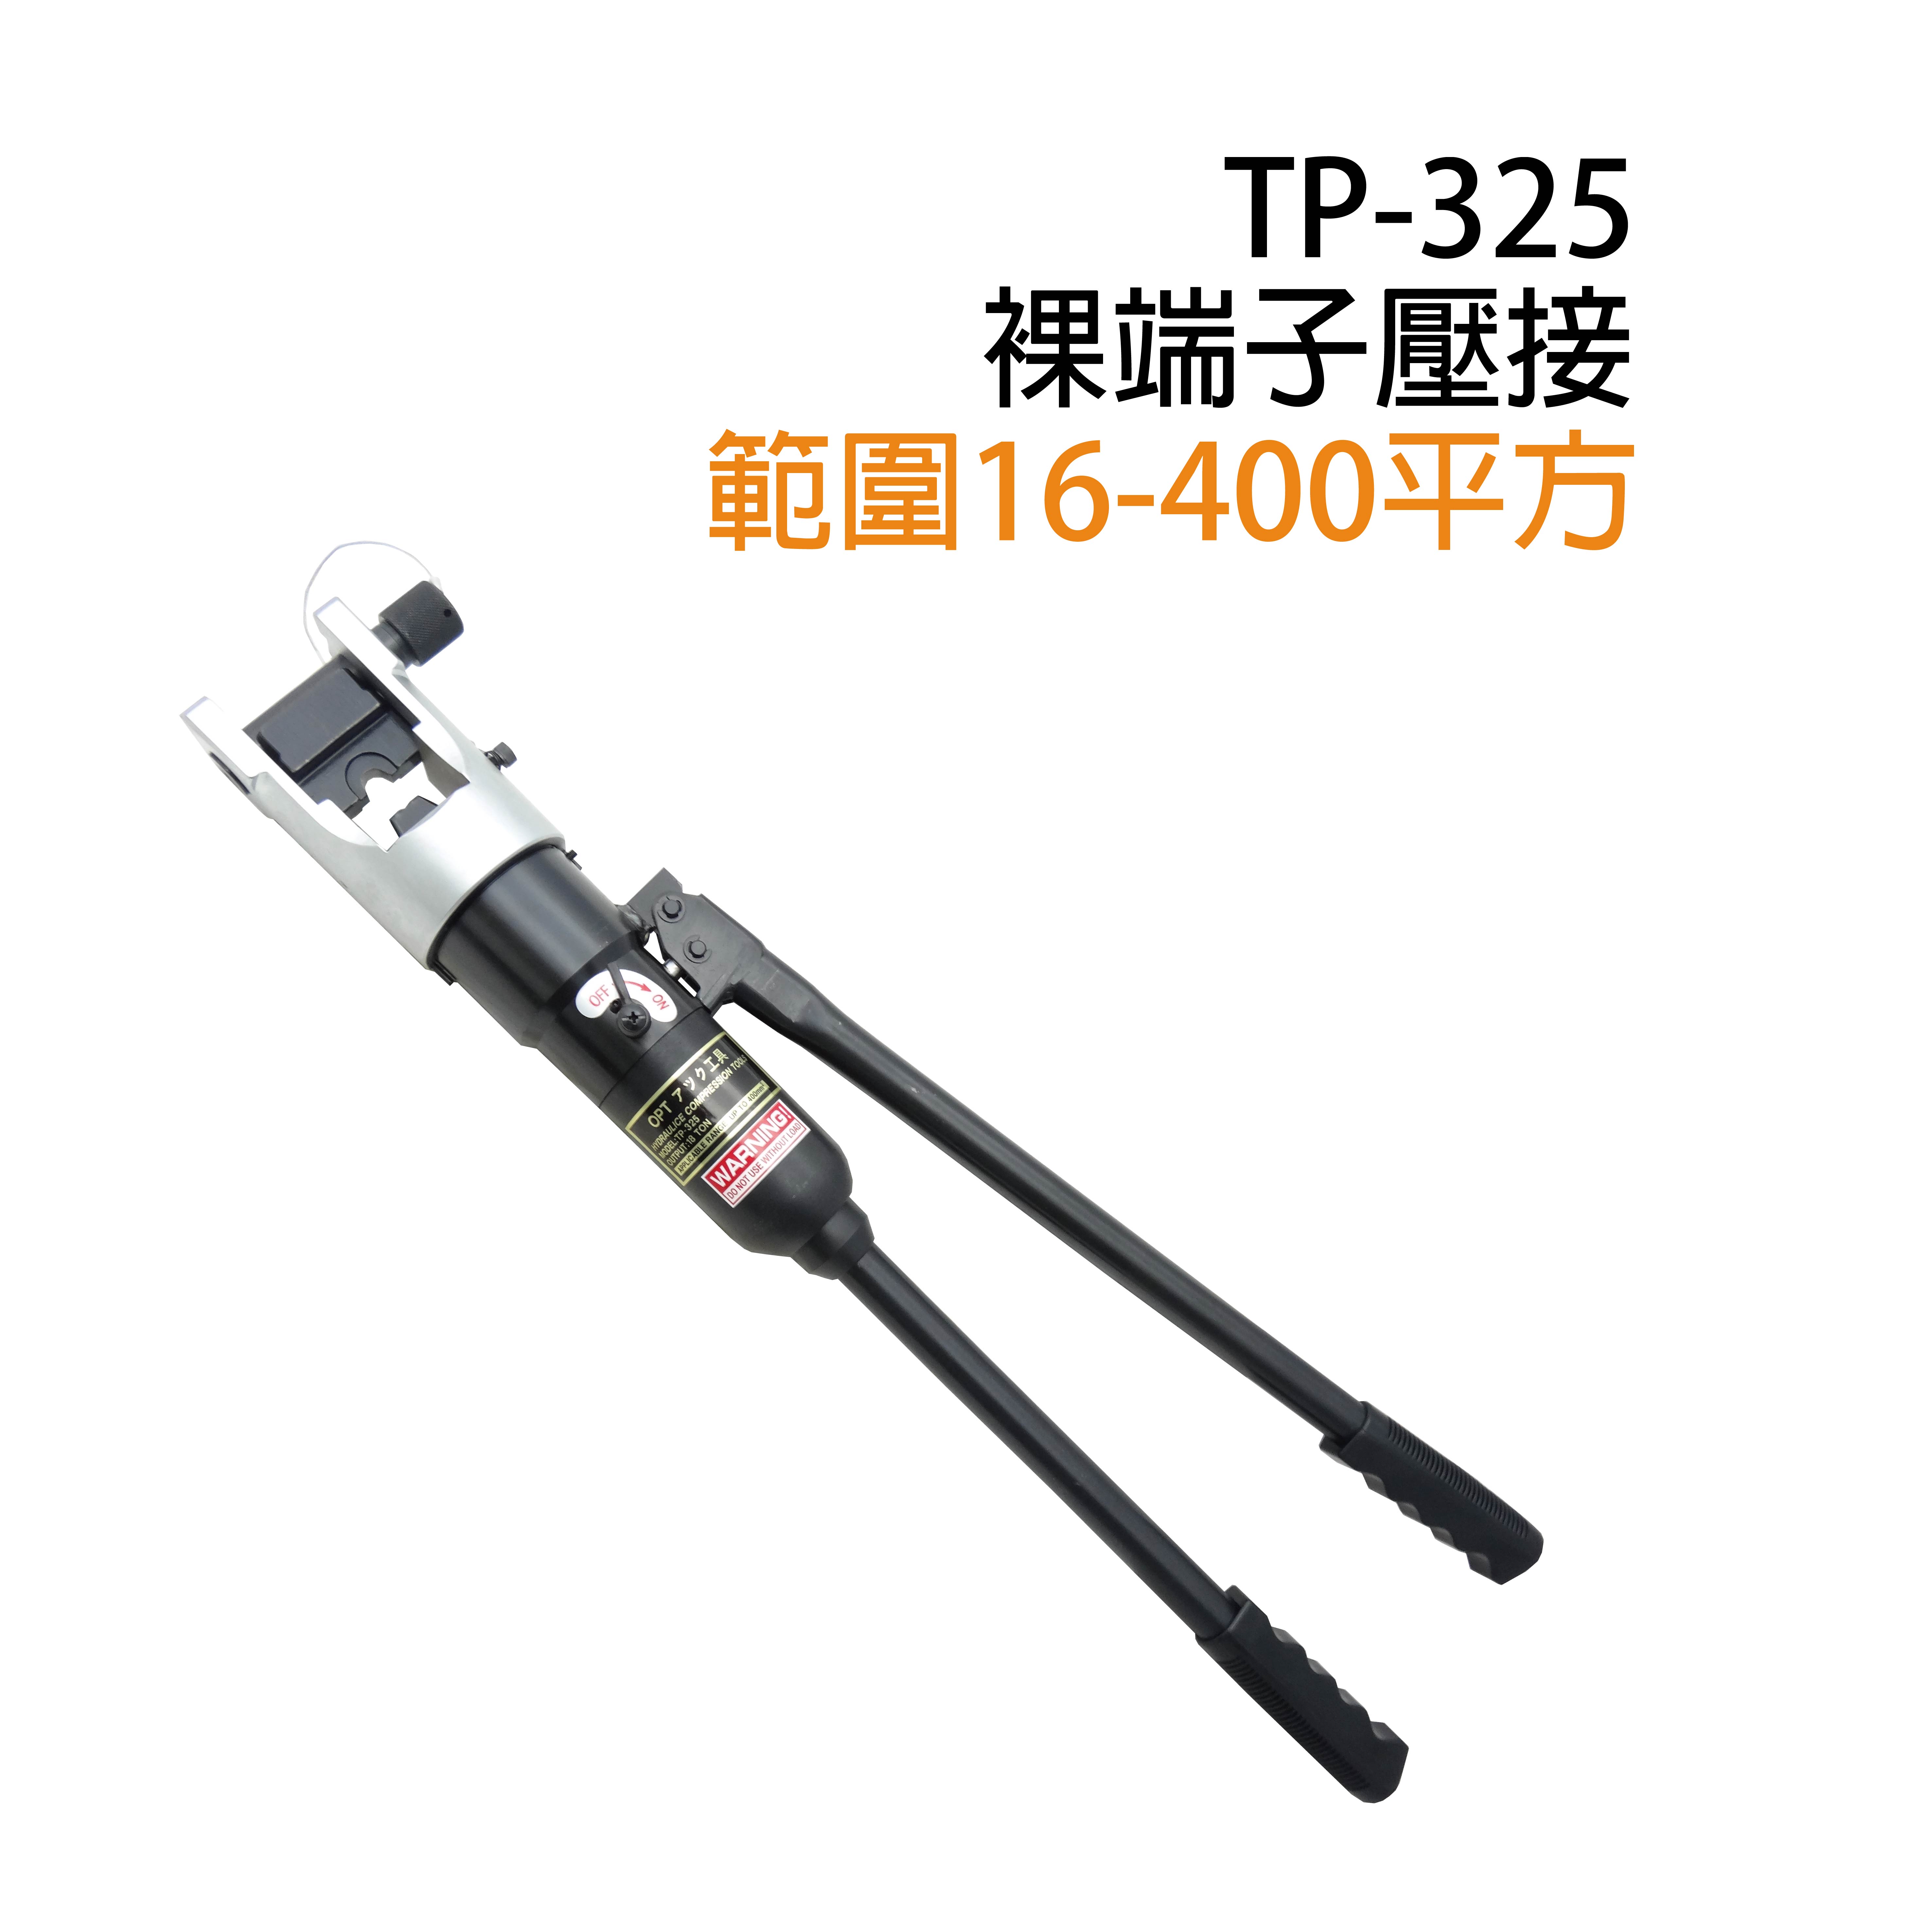 TP-325 MANUAL HYDRAULIC CRIMPING TOOLS-TP-325